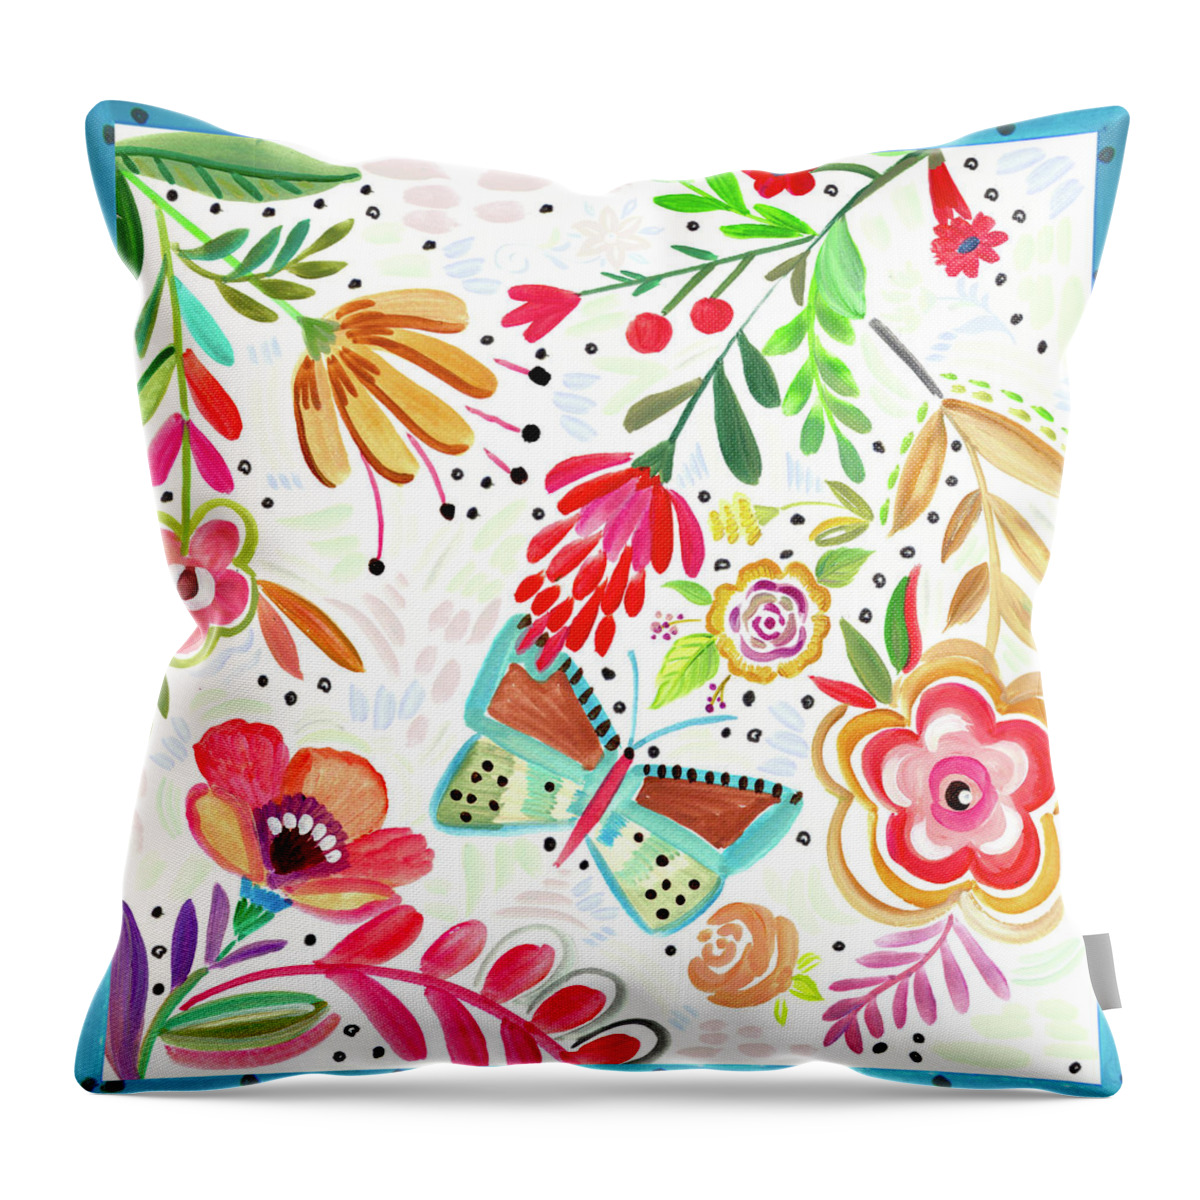 Garden Throw Pillow featuring the mixed media Boho Butterfly Garden by Ani Del Sol